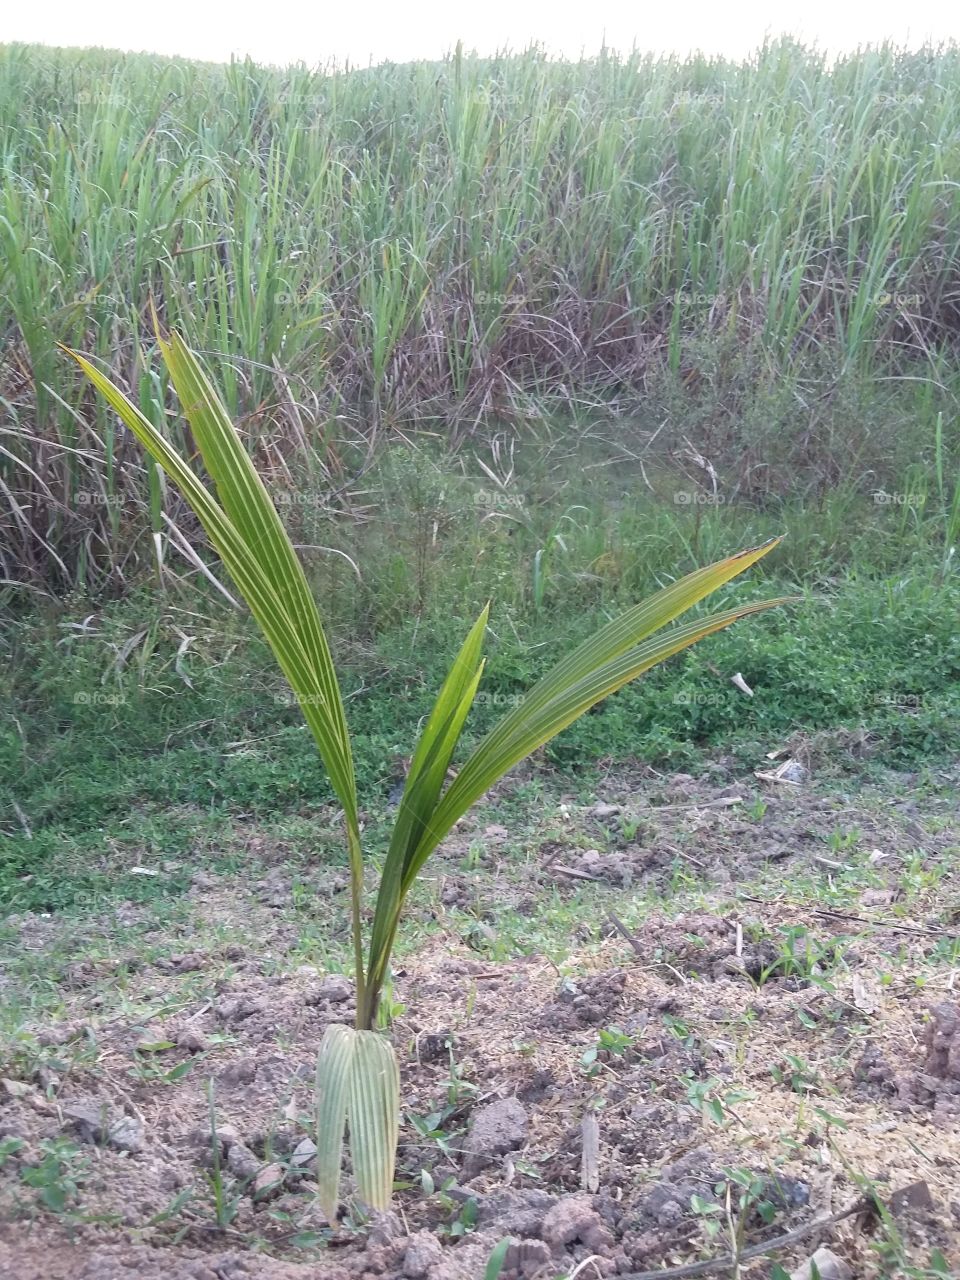 Coconut tree seedling near the Ipojuca sugarcane plantation in Ipojuca, Pernambuco, Brazil.